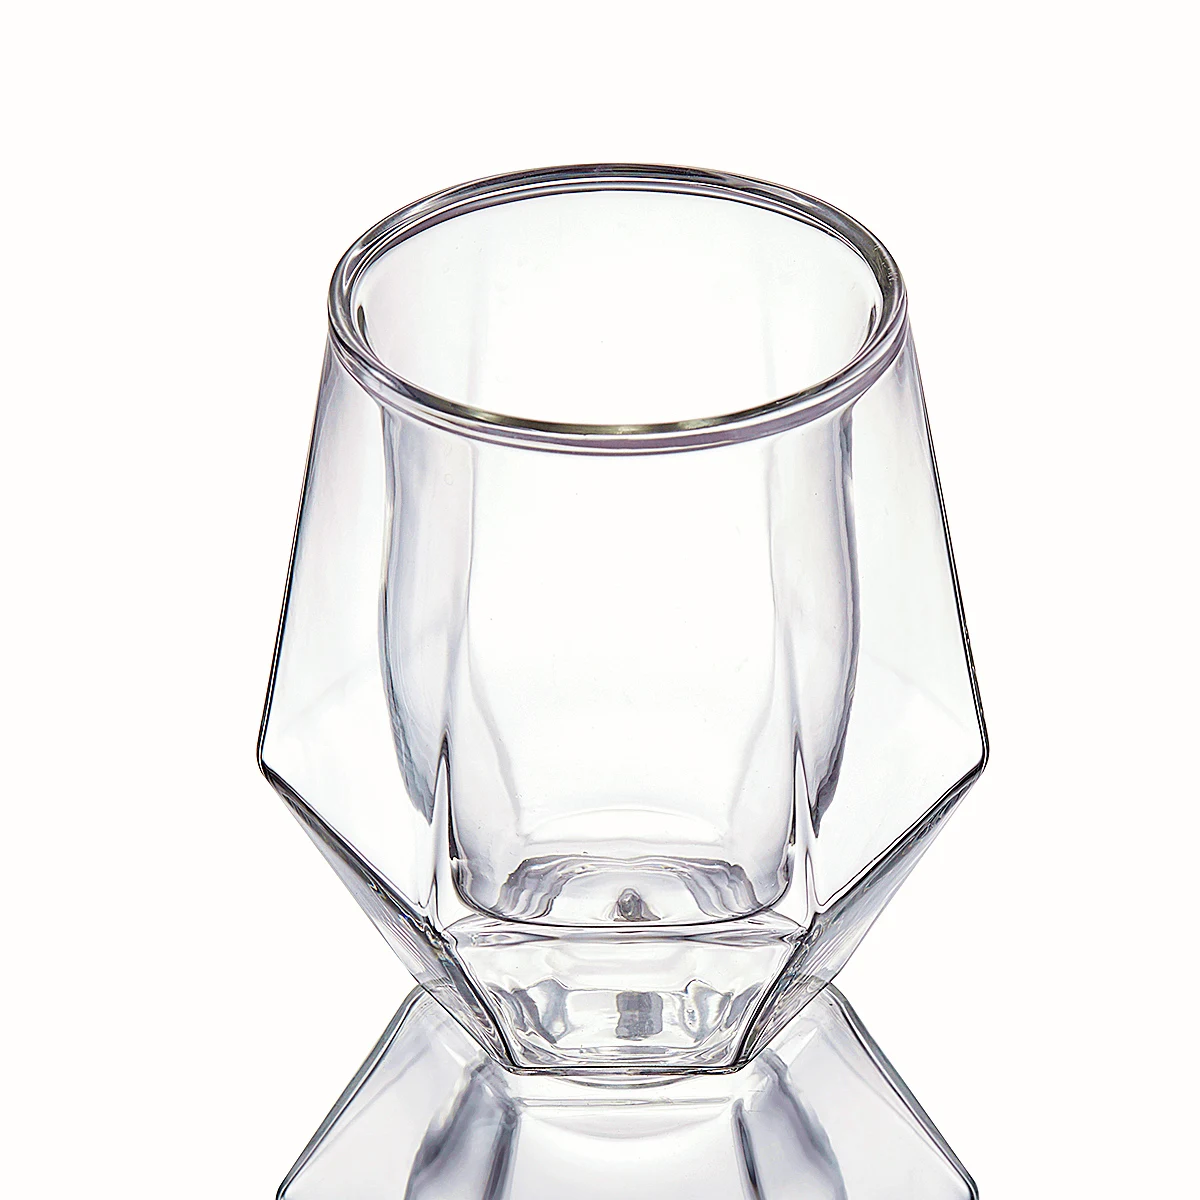 https://ae01.alicdn.com/kf/S20eb3e0cc357436cb5298793067a1229j/Double-Wall-Insulated-Old-Fashioned-Whiskey-Glasses-Set-of-2-Classic-Scotch-Glasses-Bourbon-Rocks-Glasses.jpg